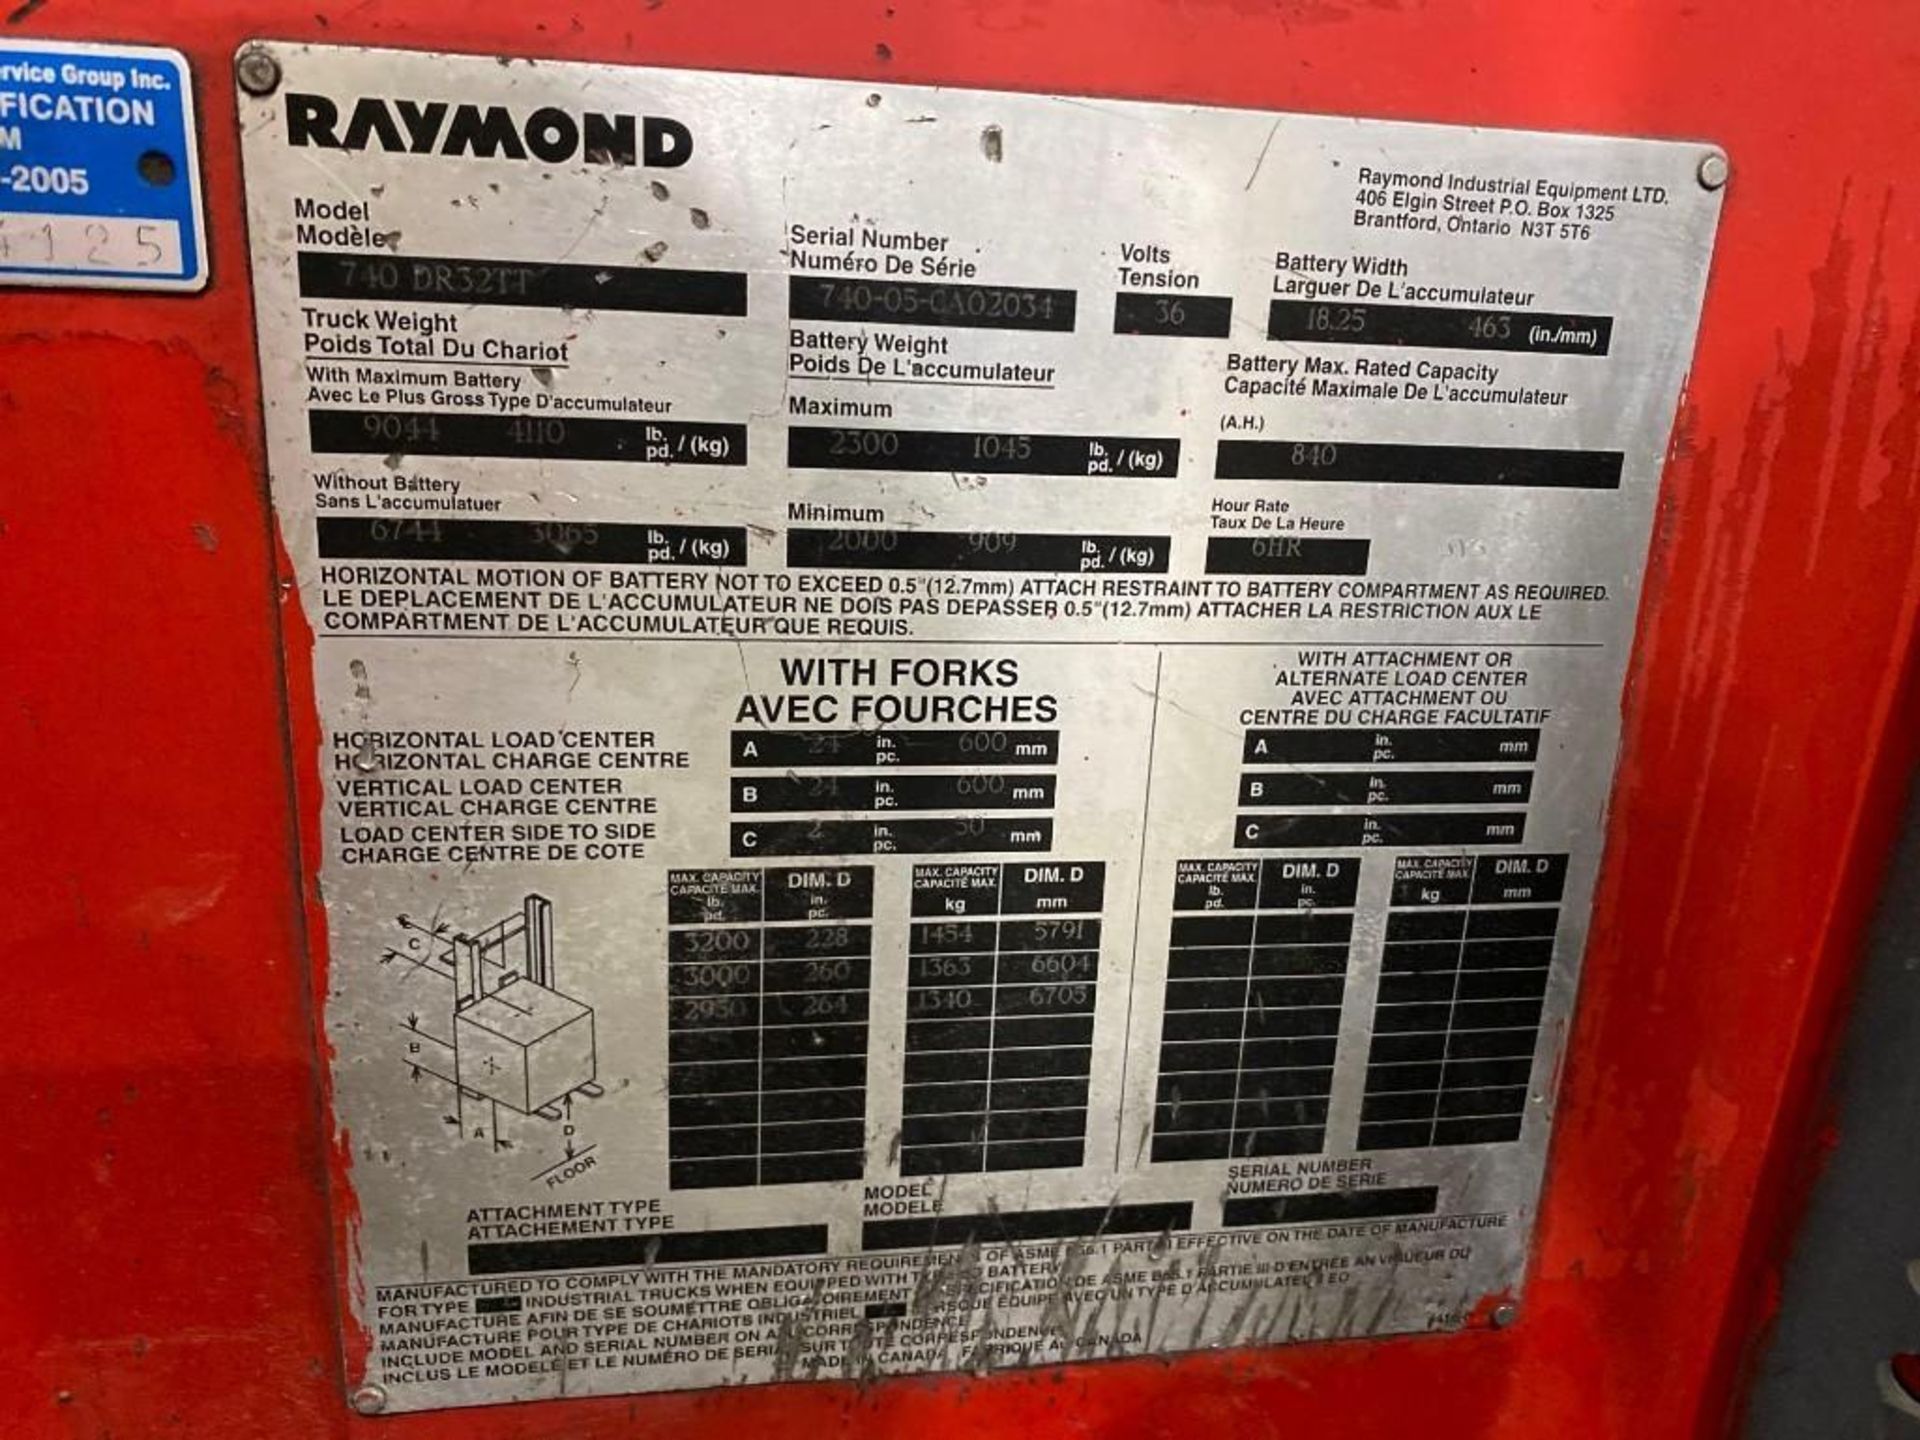 2005Raymond 740-DR32TT electric lift - Image 2 of 7